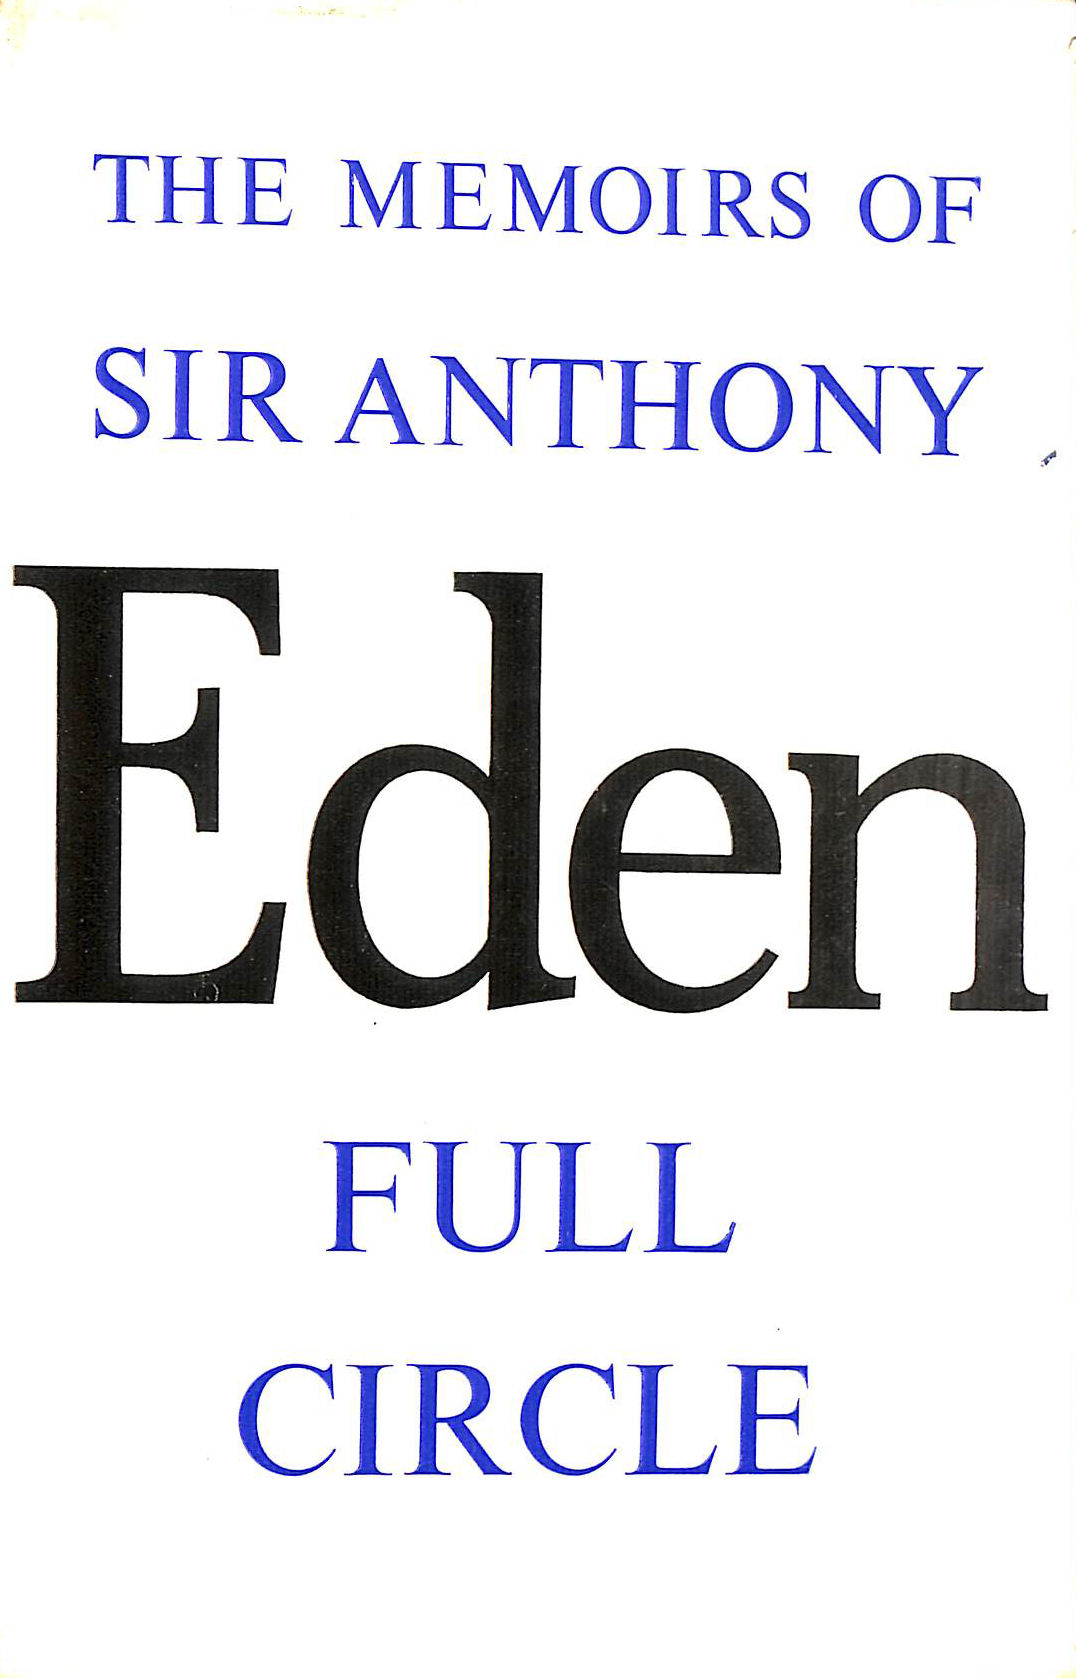 EDEN, SIR ANTONY - The Memoirs of Sir Antony Eden Full Circle